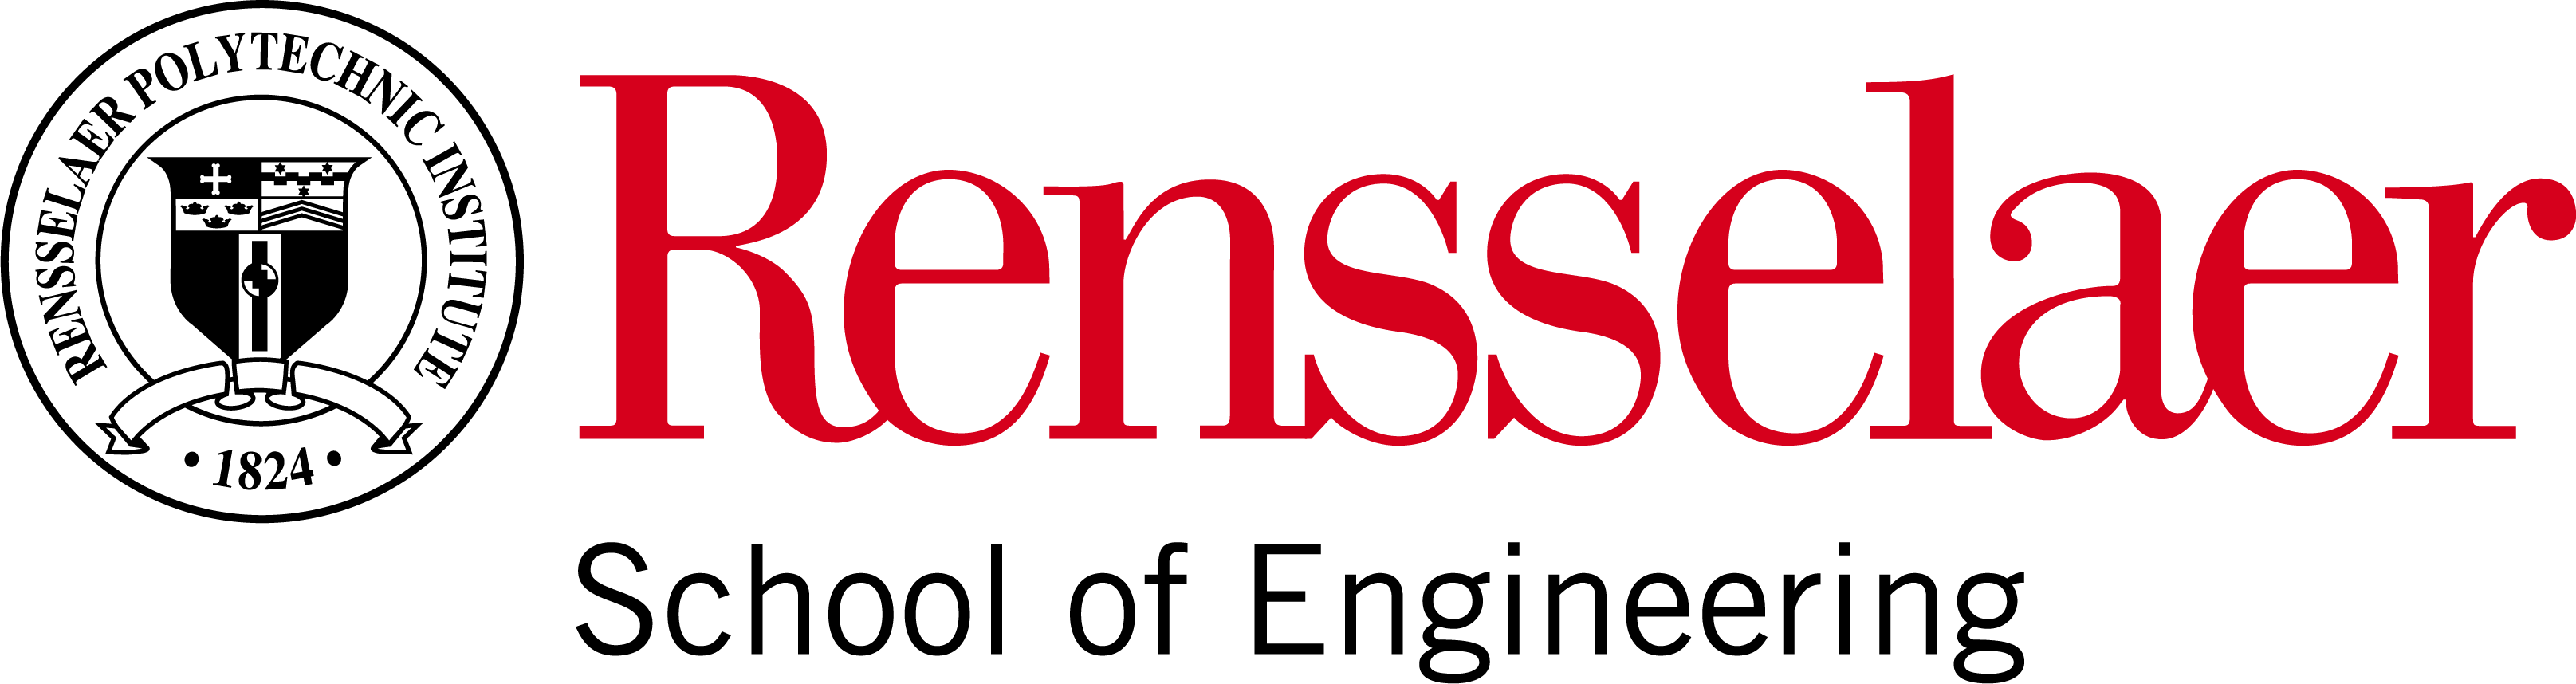 Renssaelaer Engineering logo.